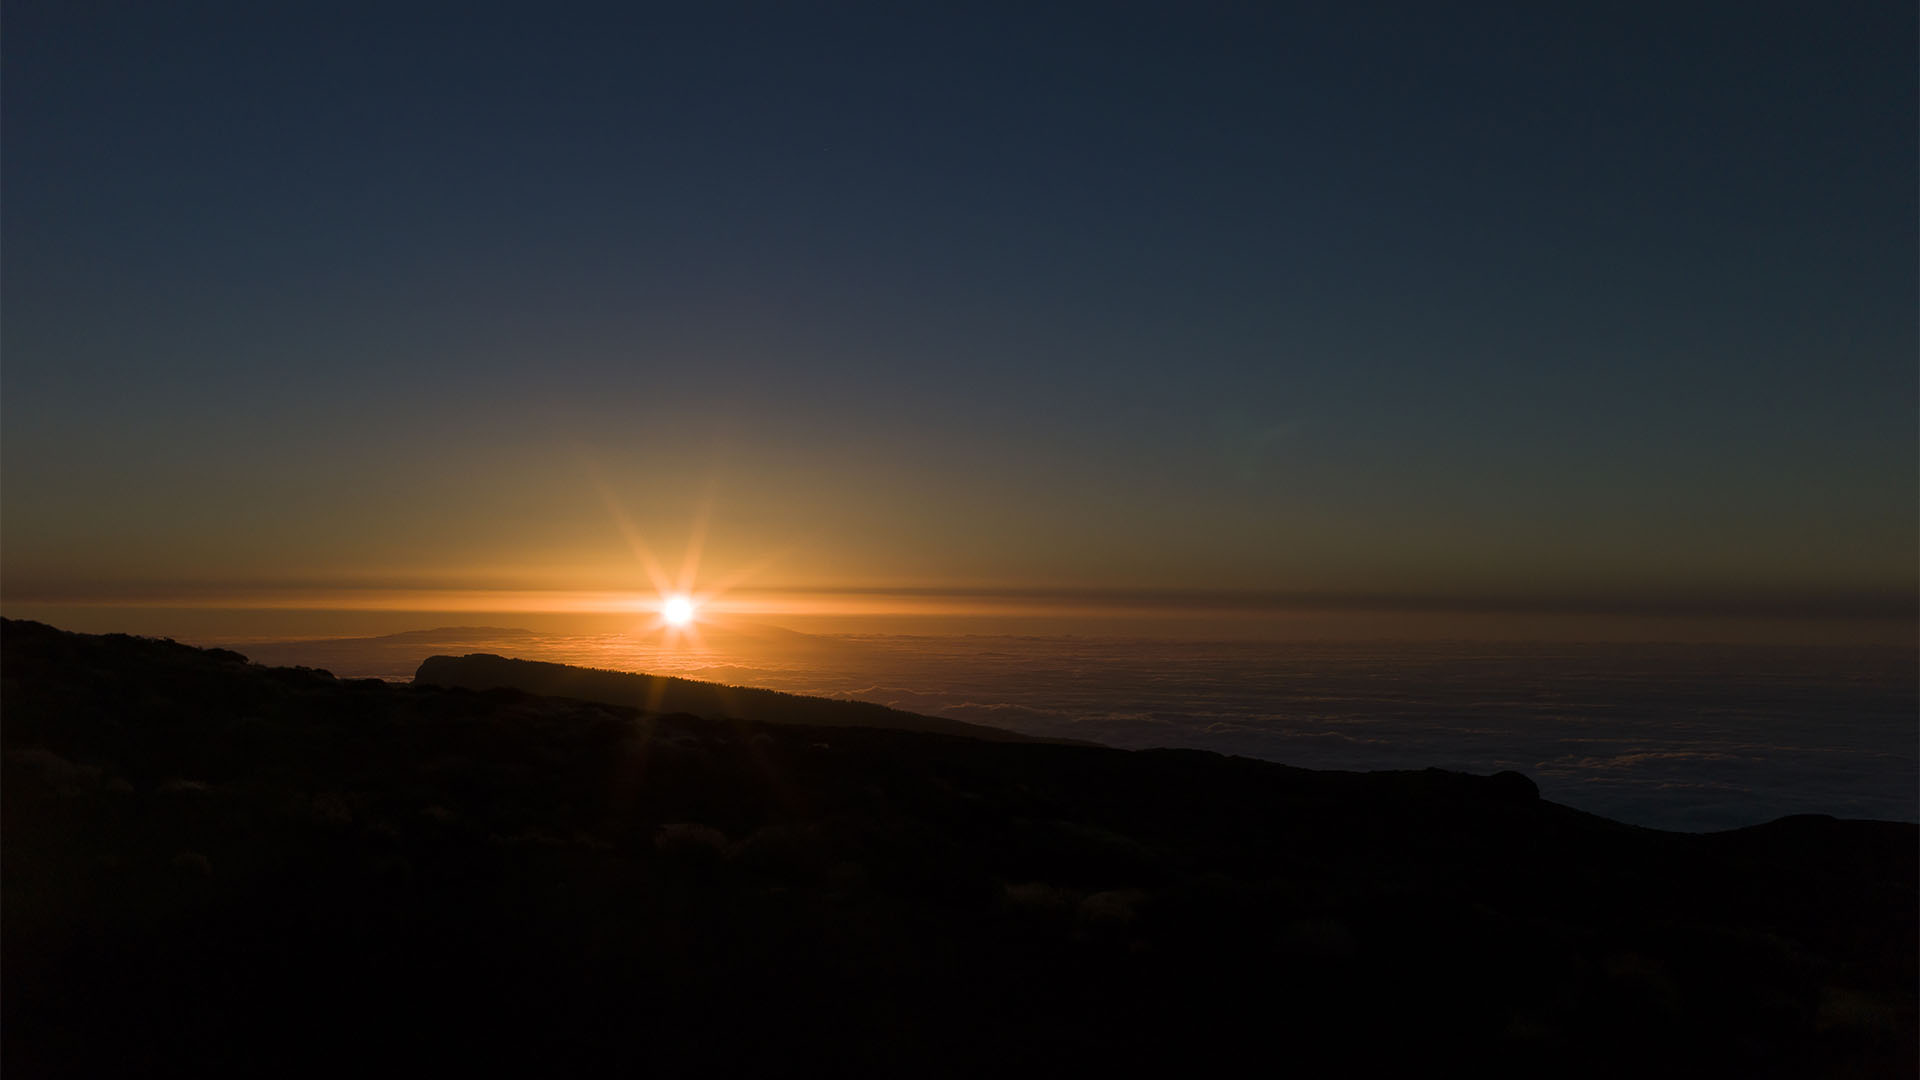 Sonnenuntergang Teide: Die Sonne versinkt hinter den Bergen der insel La Palma, die aus dem Wolkenmeer ragen. Blick vom Montaña de la Carniceria 2.367 m.